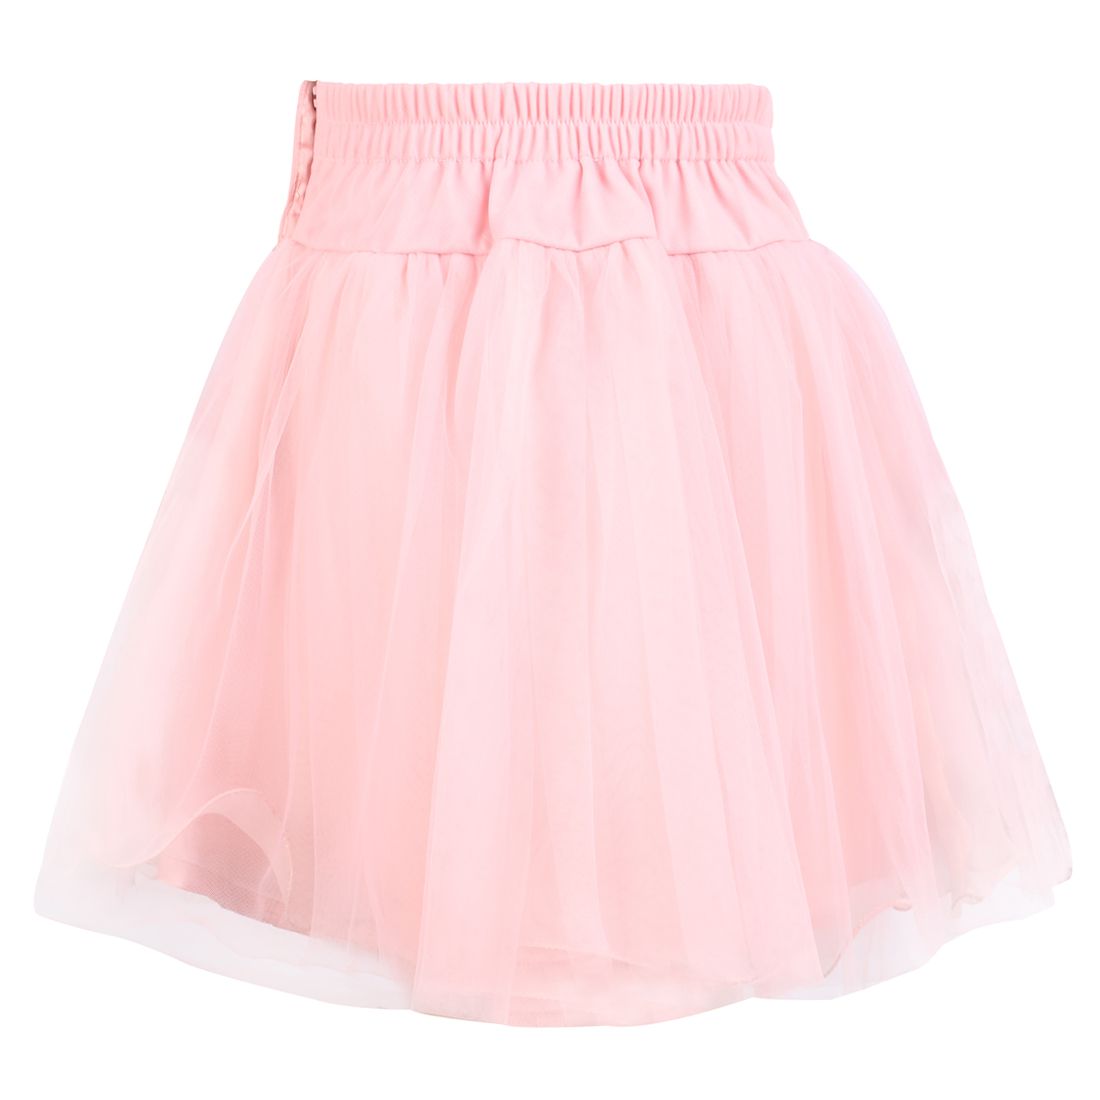 Cutecumber Girls Partywear Net Skirt - Buy Cutecumber Girls Partywear ...